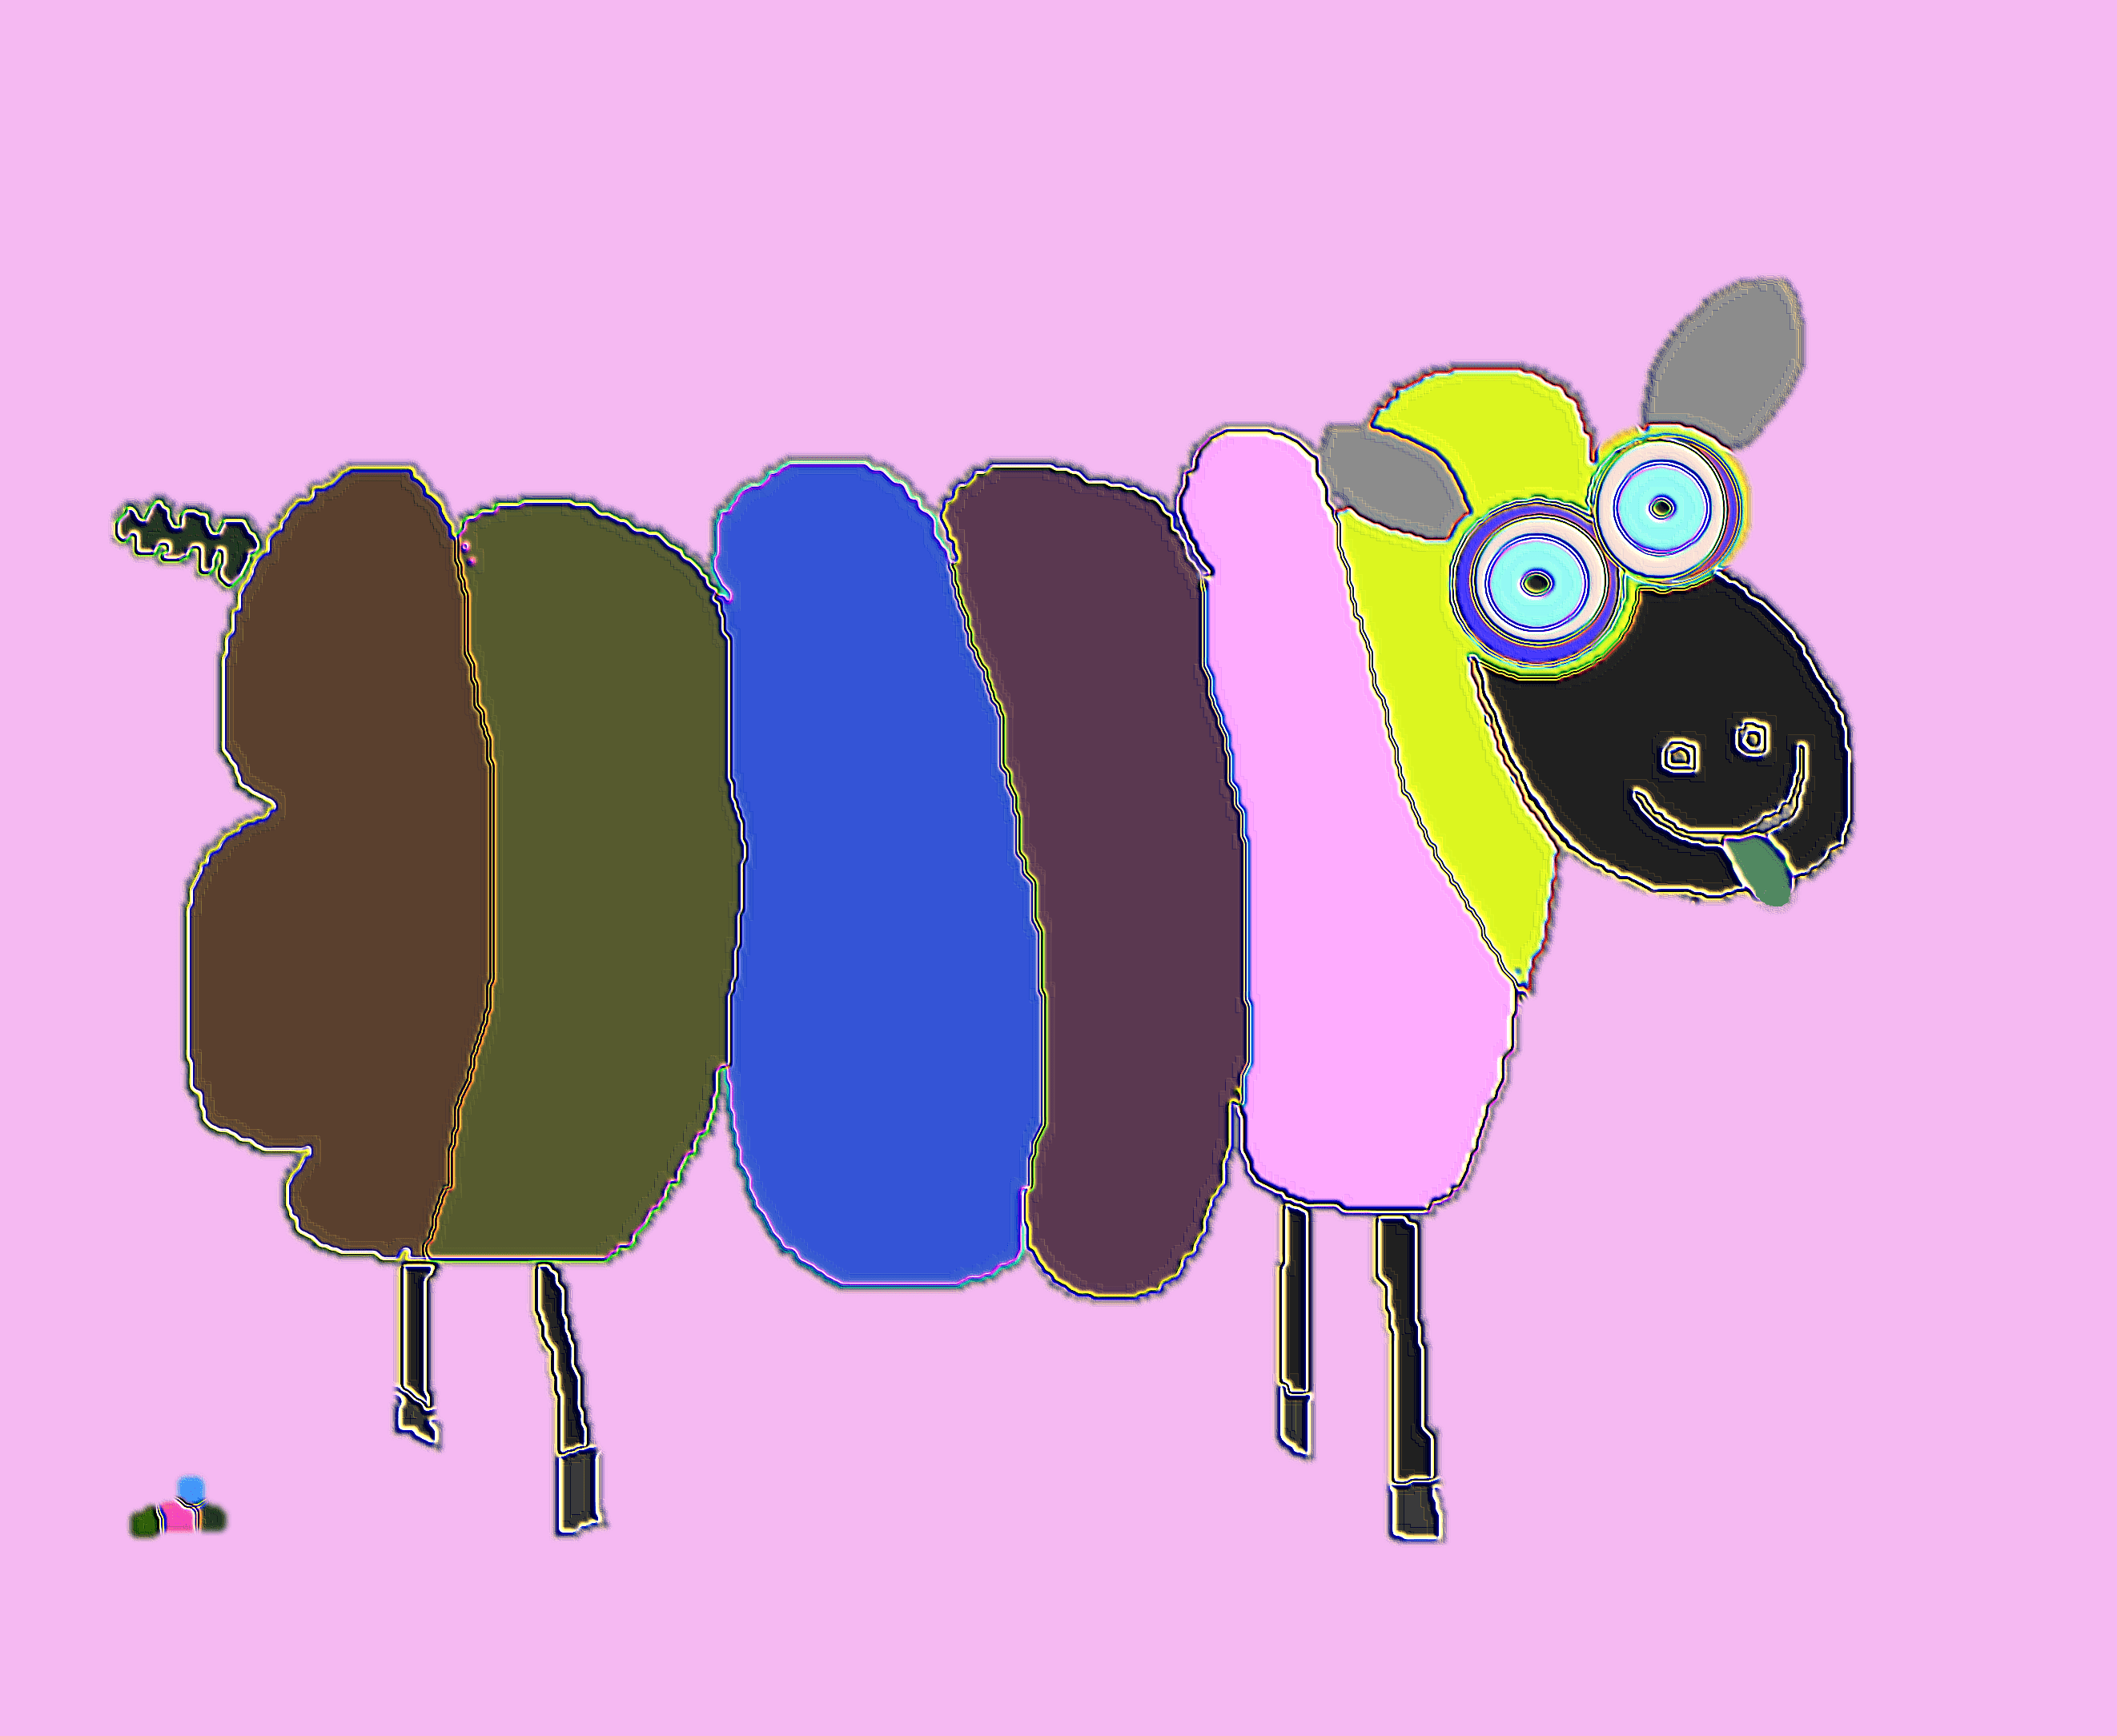 Sheep 5. Magic mushrooms are having sme strange effects